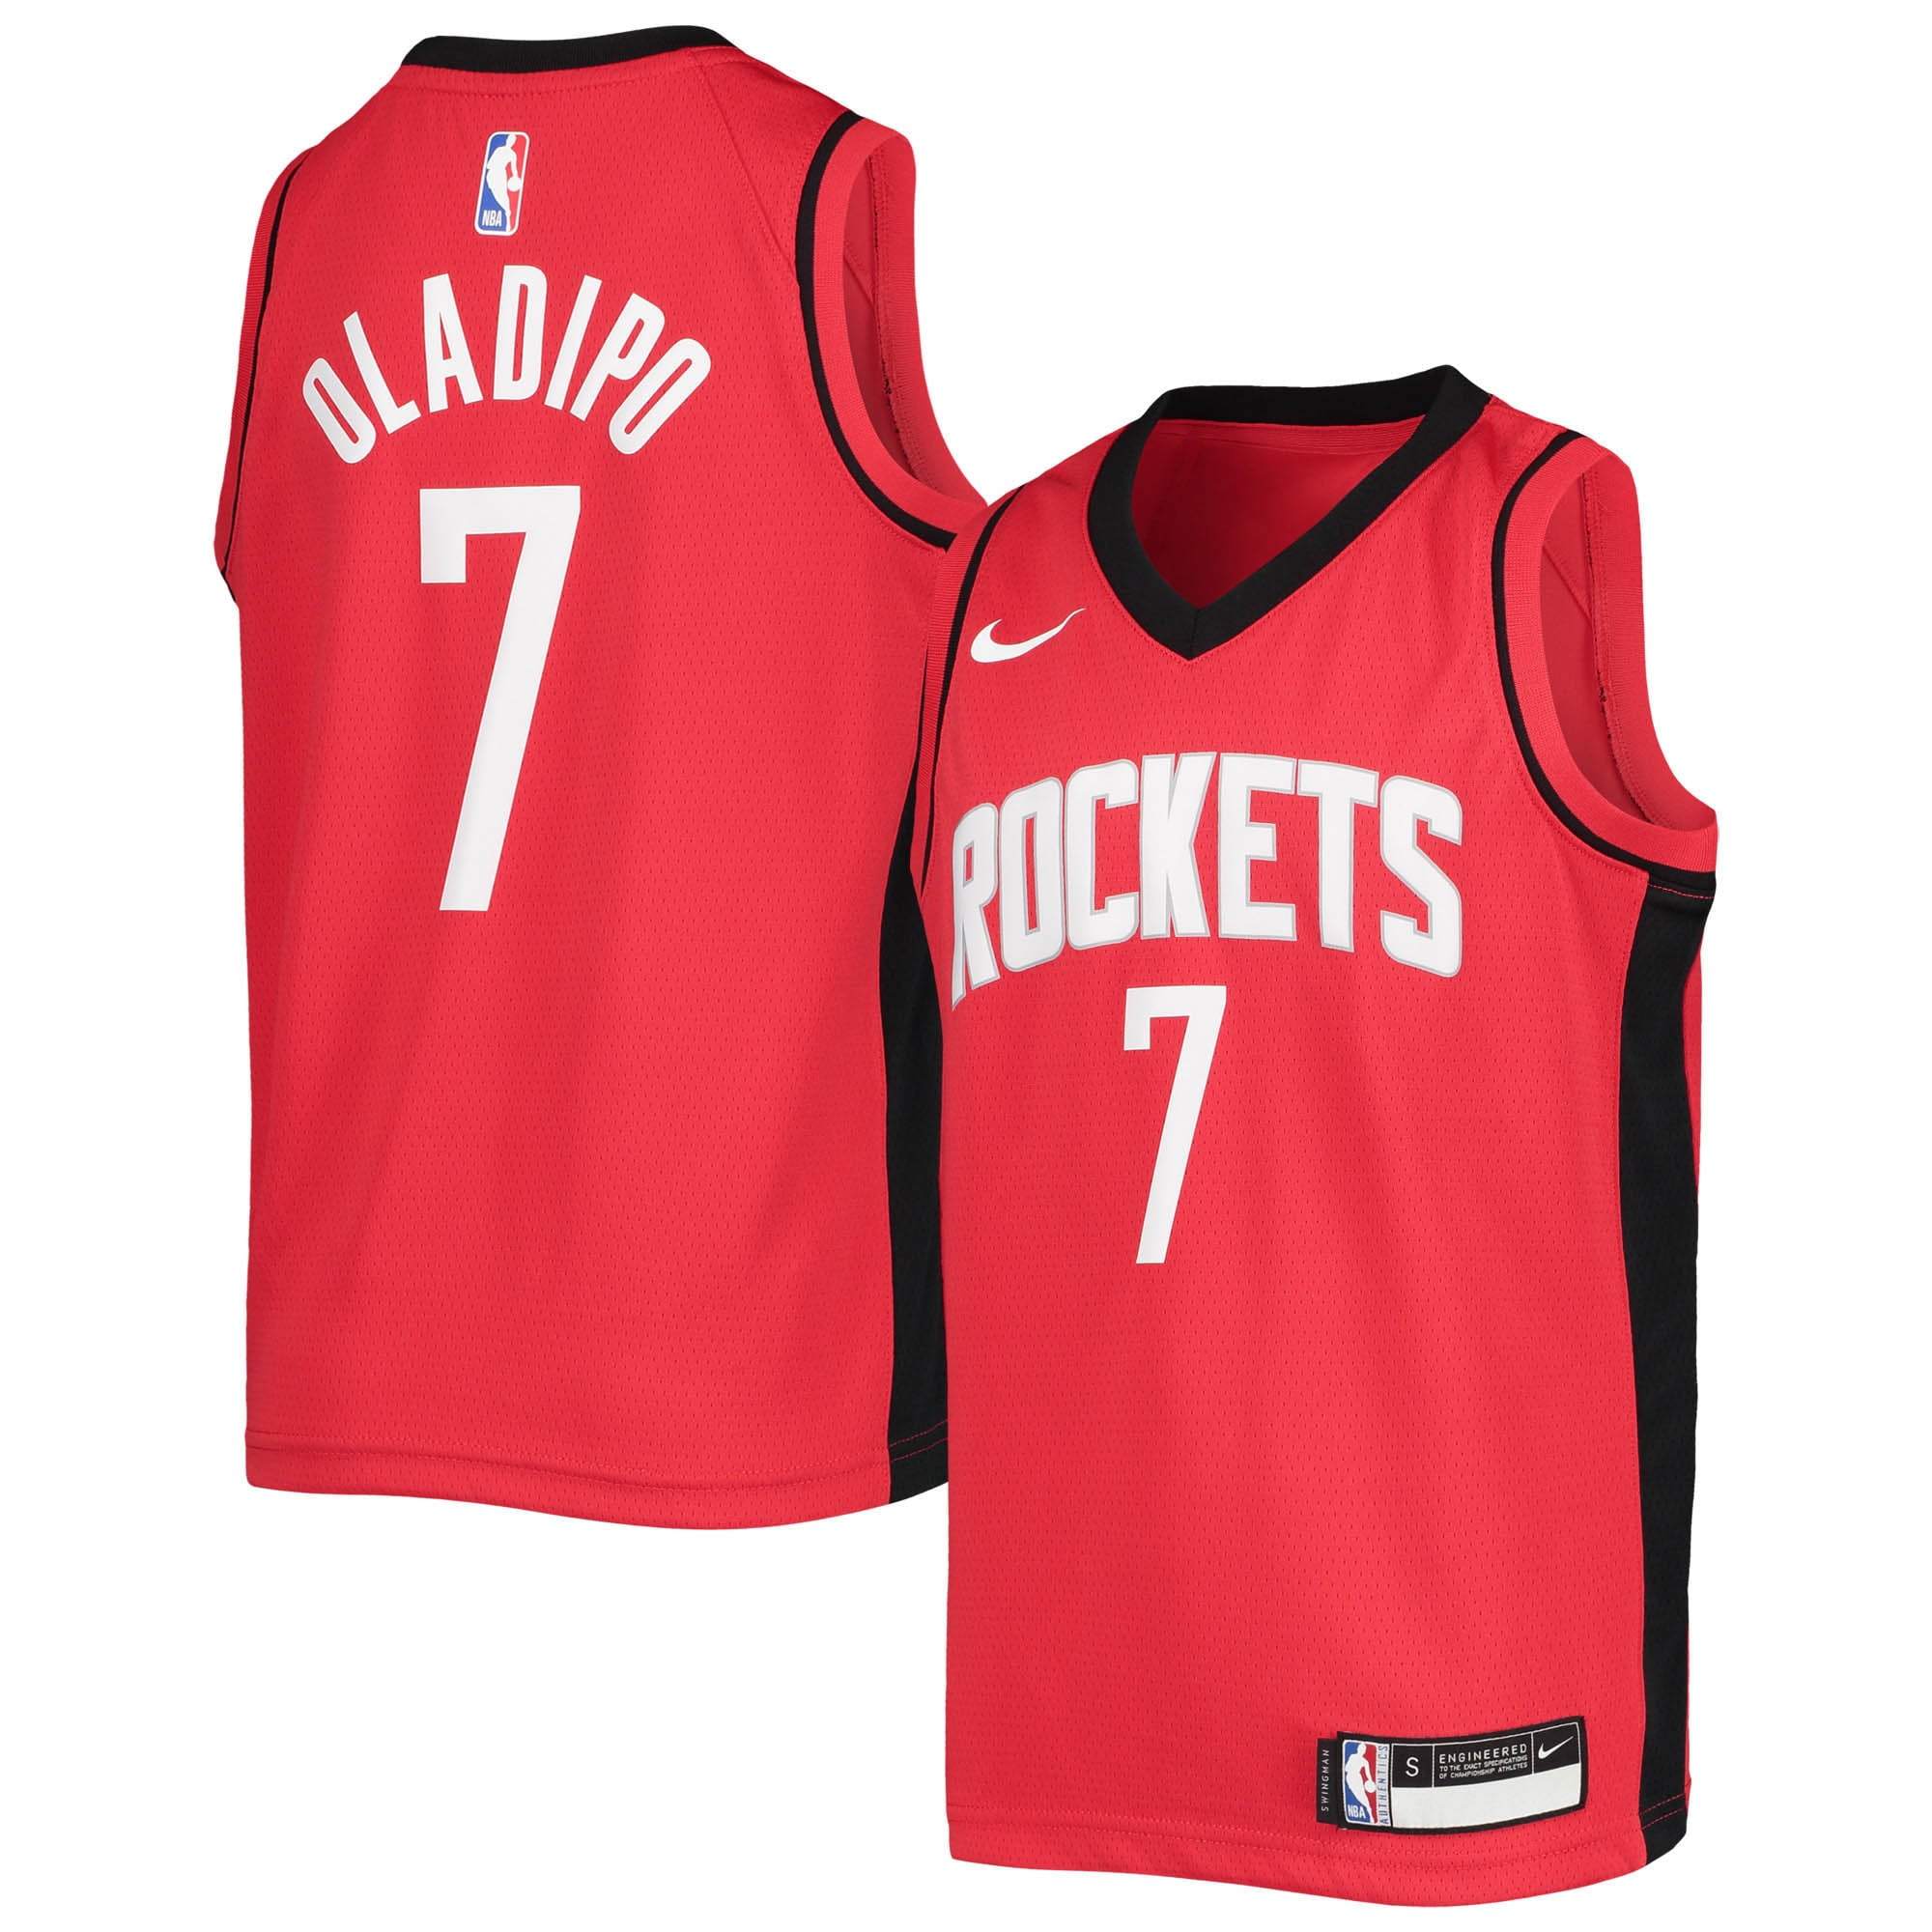 Houston Rockets uniforms for the 2020-21 NBA season